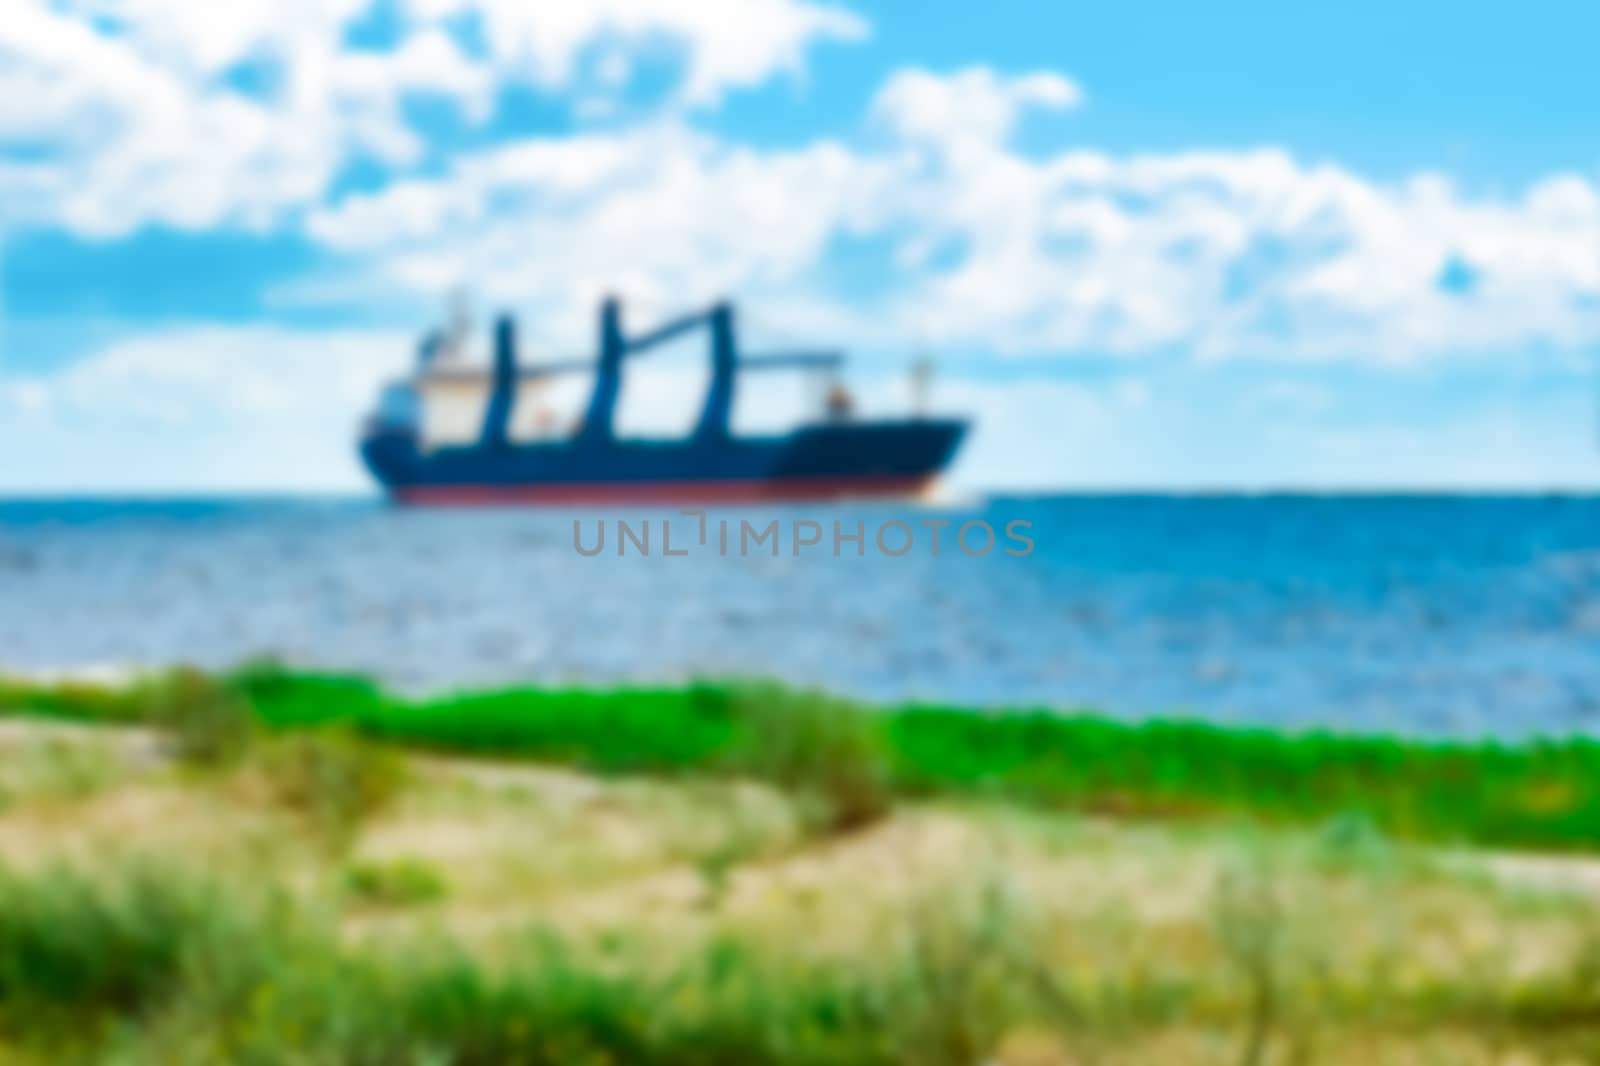 Blue cargo ship - blurred image by sengnsp